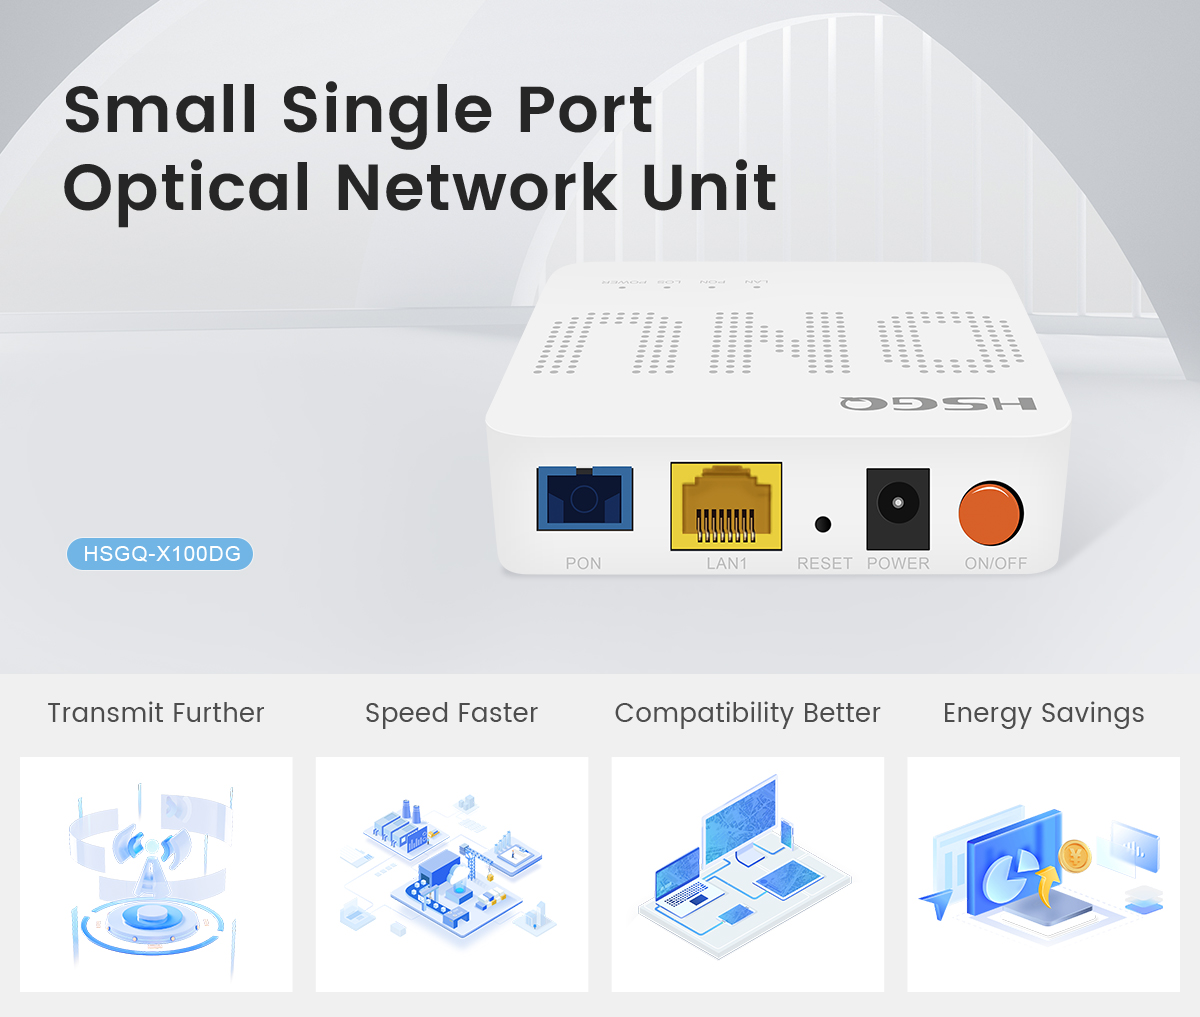 Small single port optical network unit